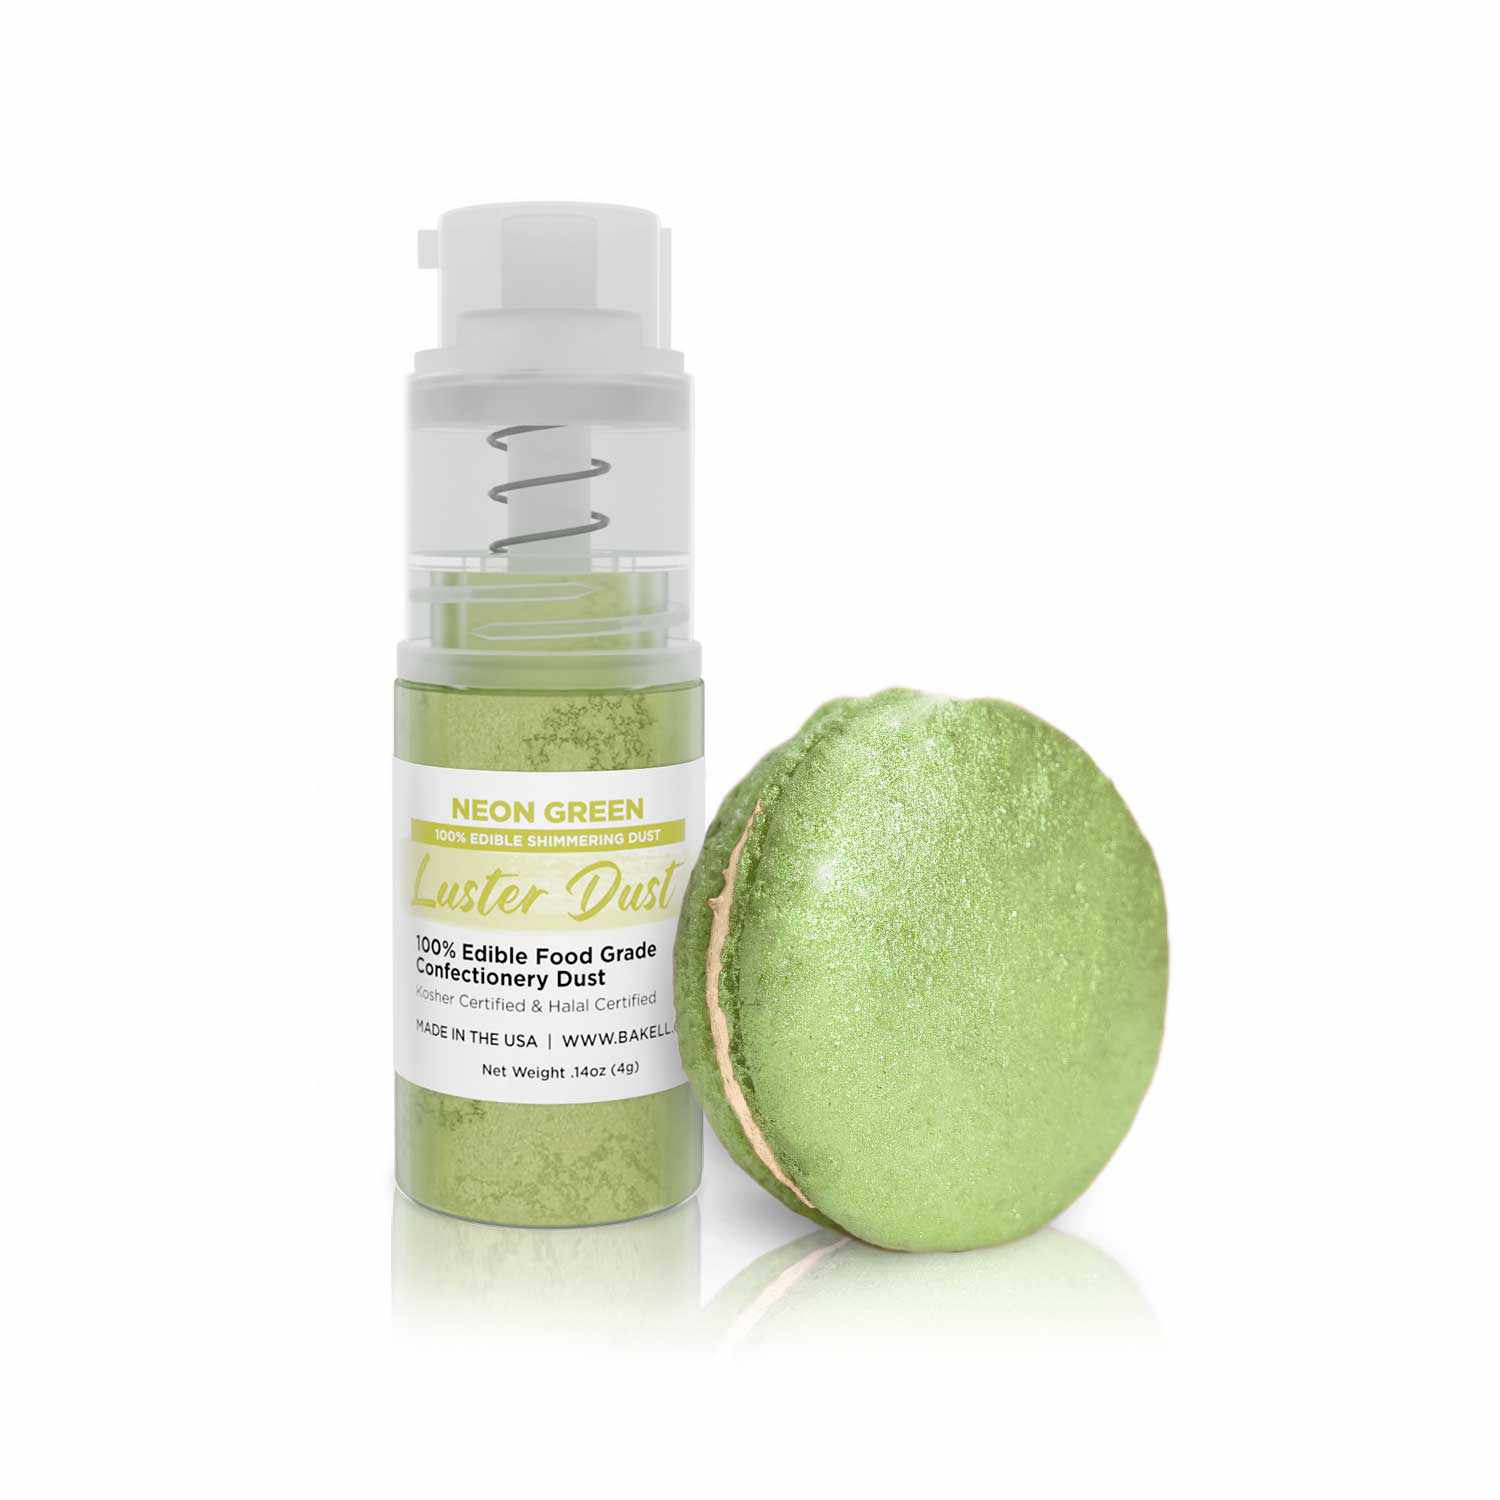 New! Minatare Luster Dust Spray Pump | 4g Neon Green Edible Glitter